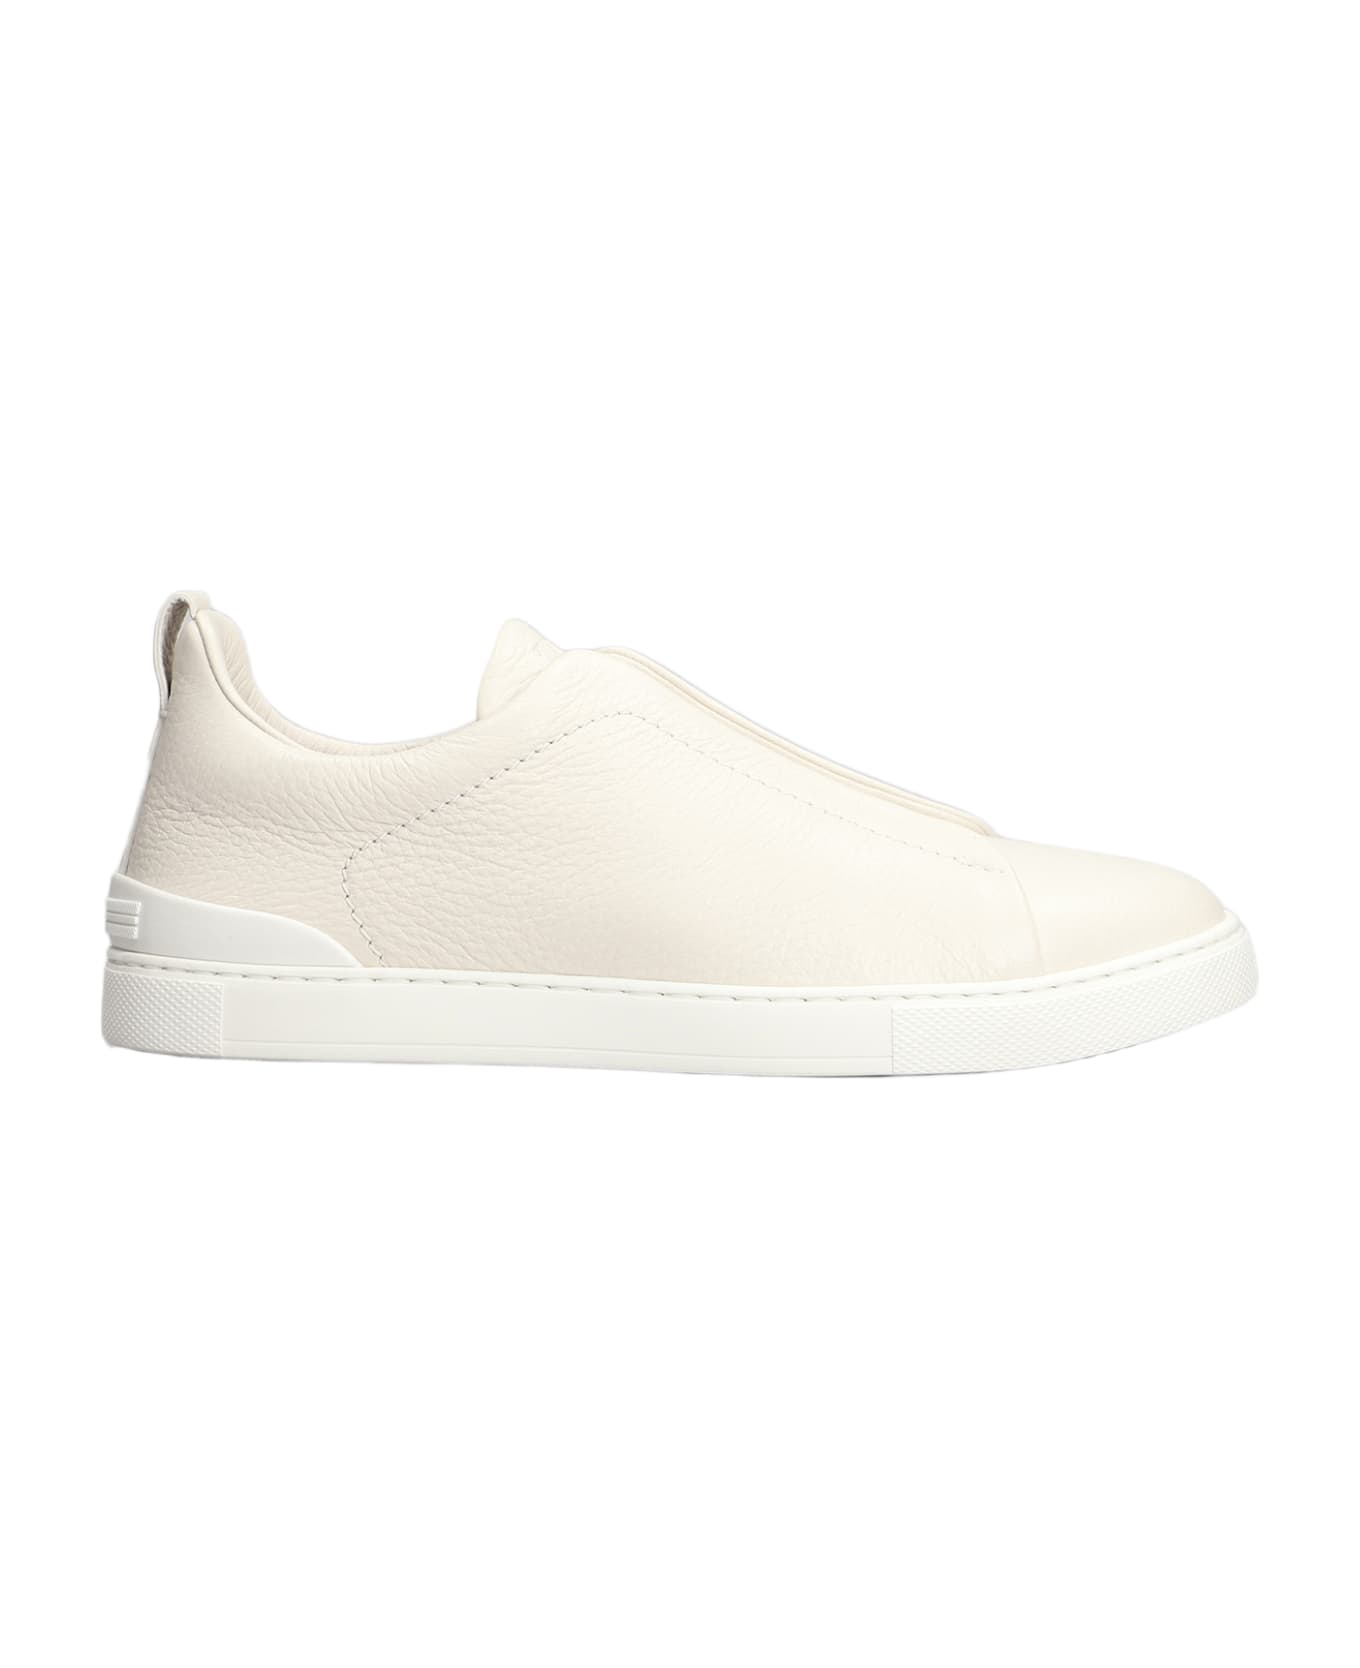 Zegna Triple Stich Sneakers In White Leather - white